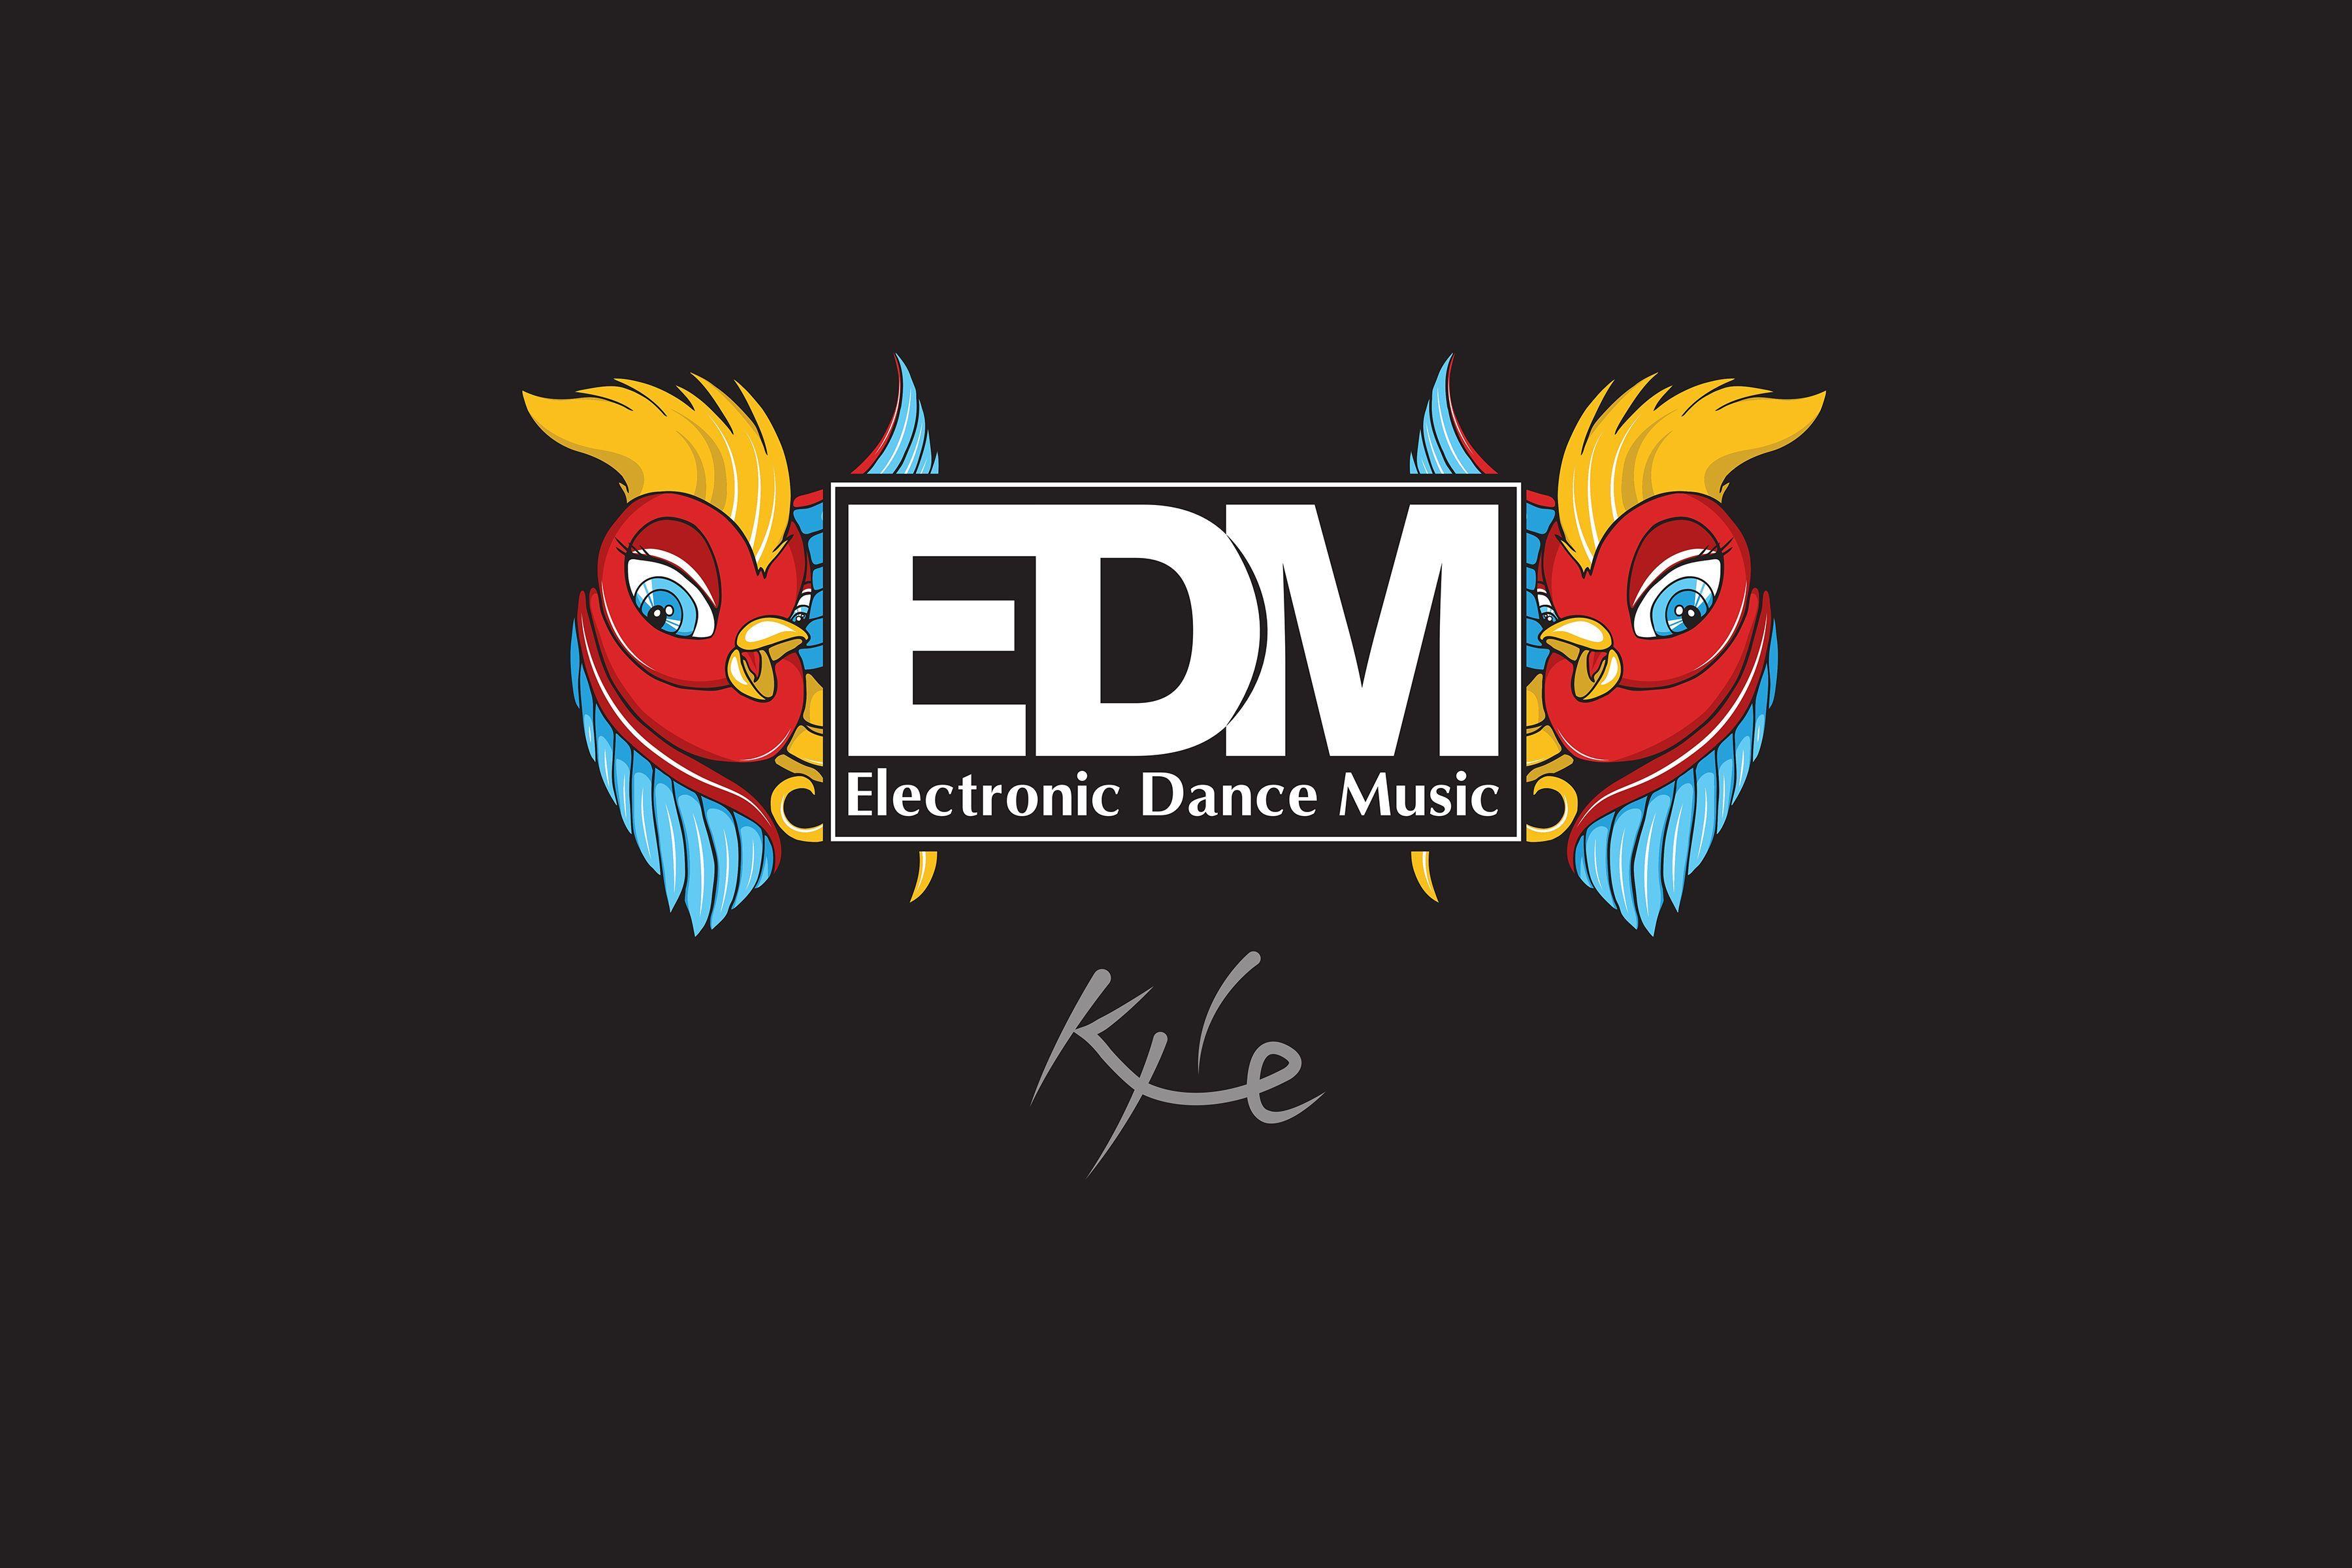 EDM Electronic Dance Music Wallpaper. LEFT OVERS